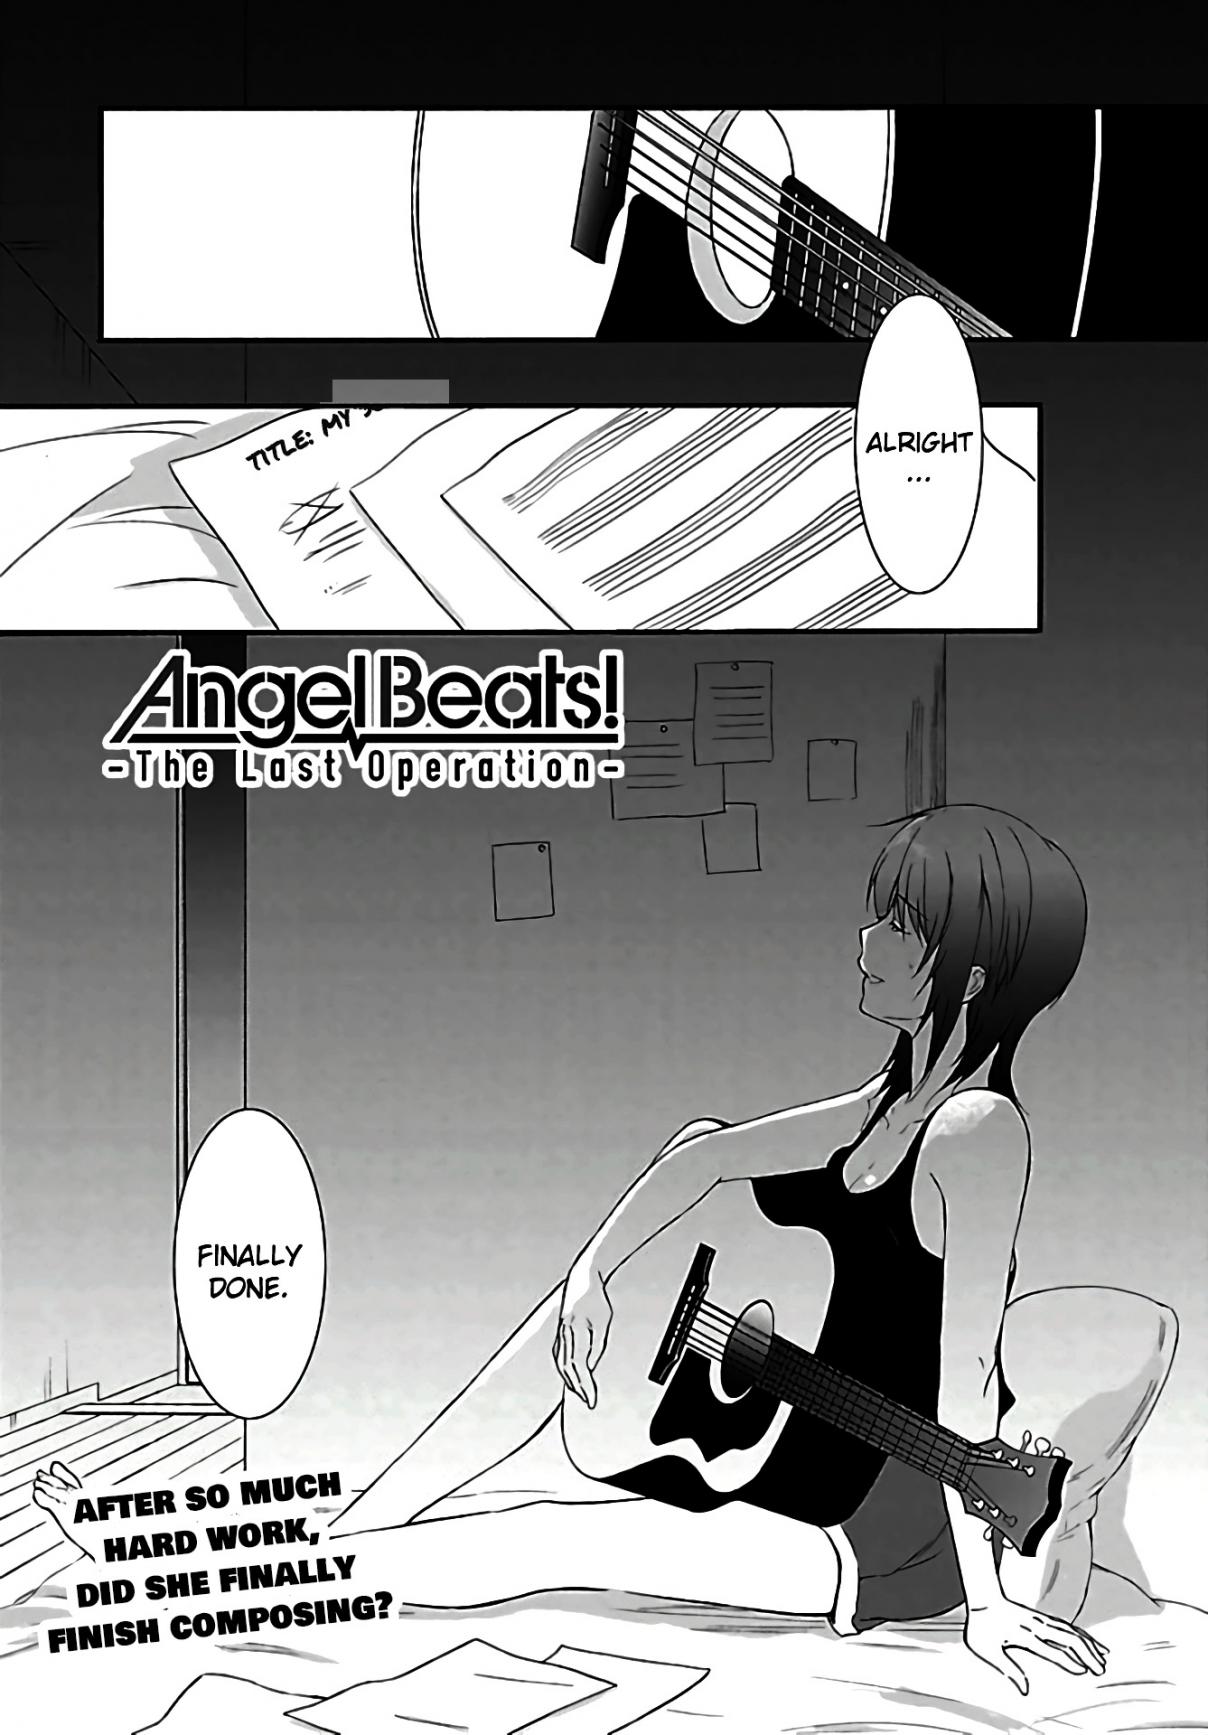 Angel Beats! The Last Operation Vol. 2 Ch. 9